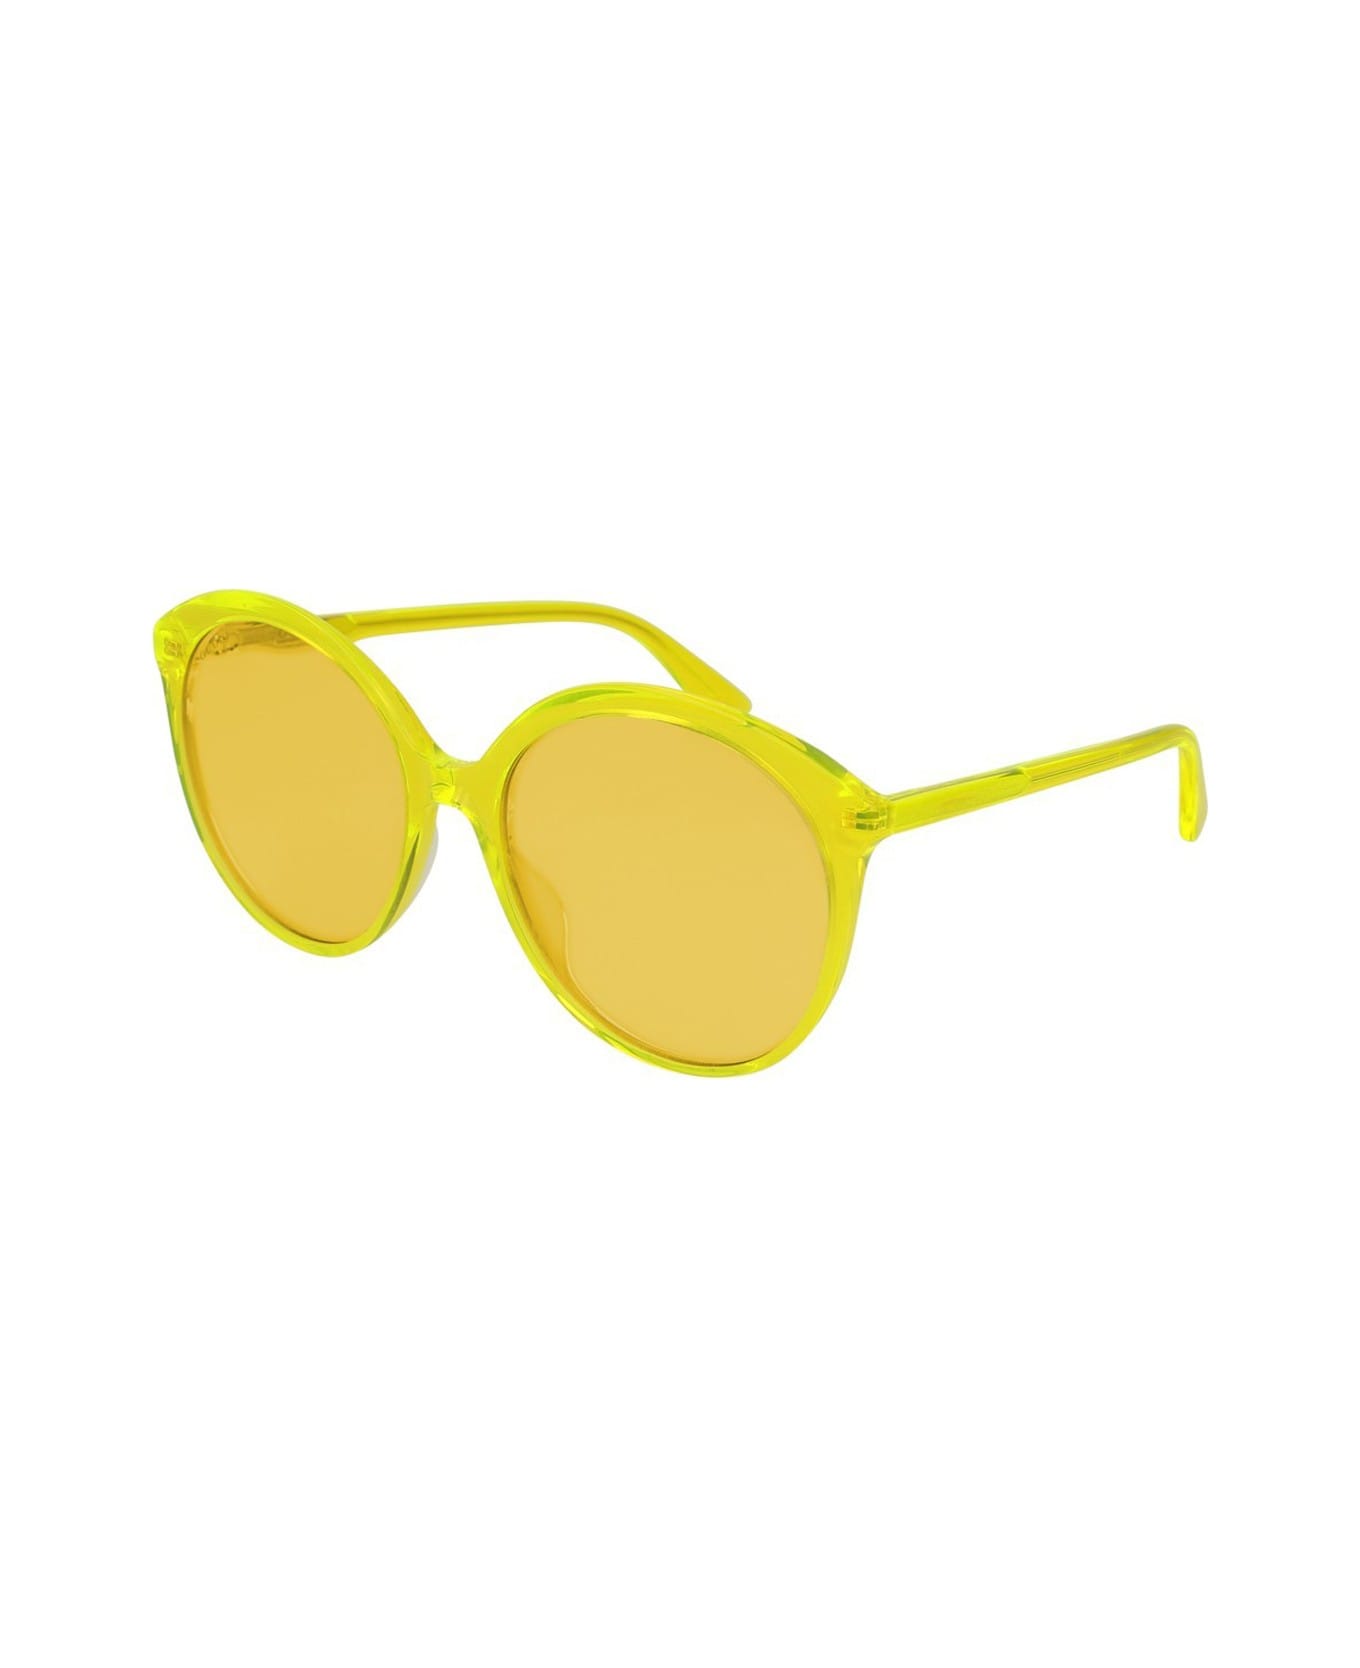 Gucci Eyewear Gg0257s Sunglasses - Giallo